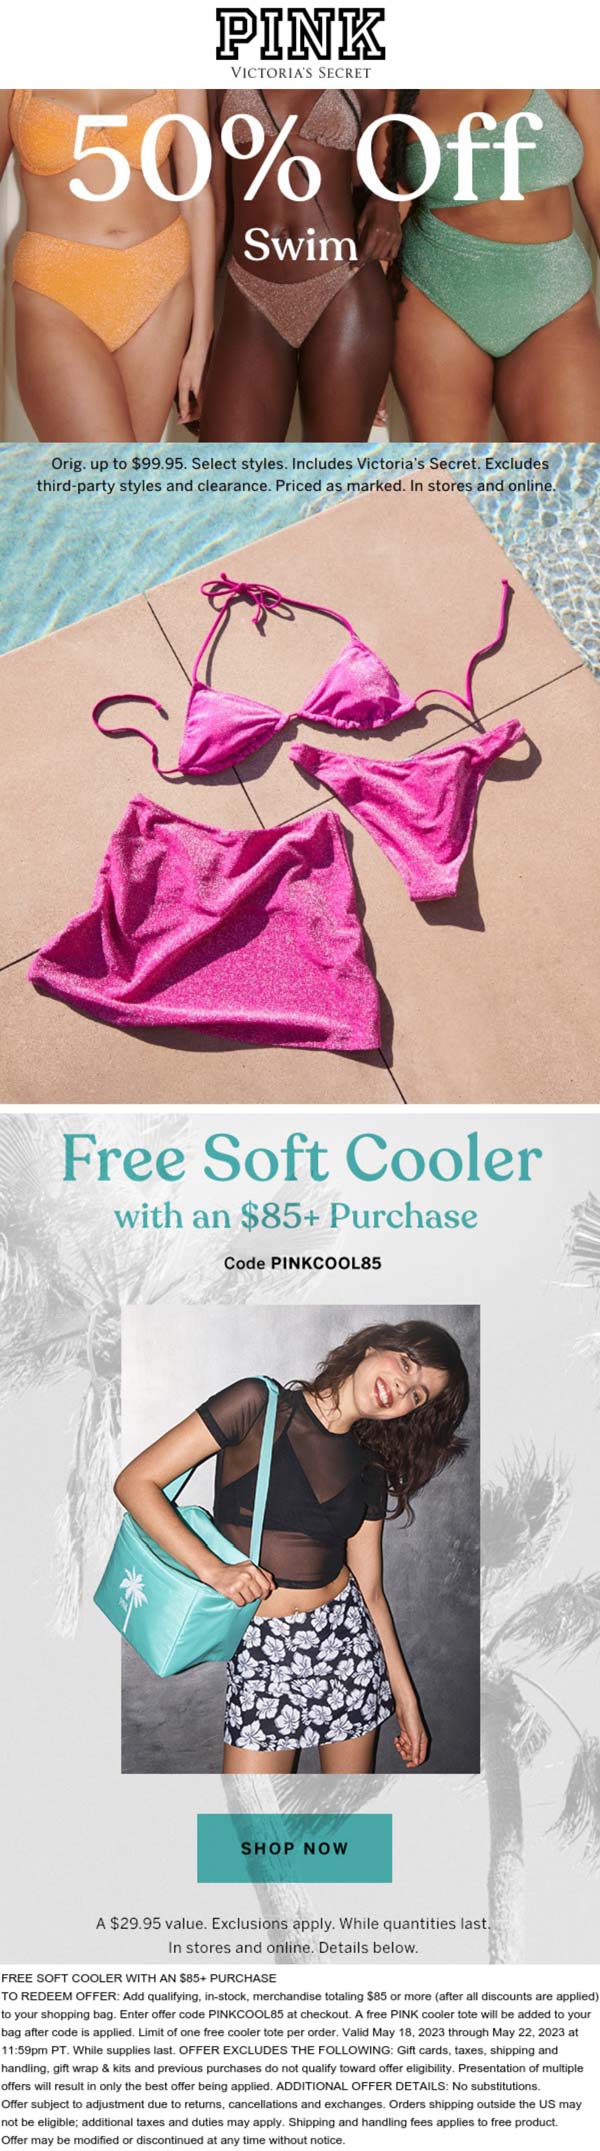 PINK stores Coupon  50% off swim + free cooler on $85 at PINK via promo code PINKCOOL85 #pink 